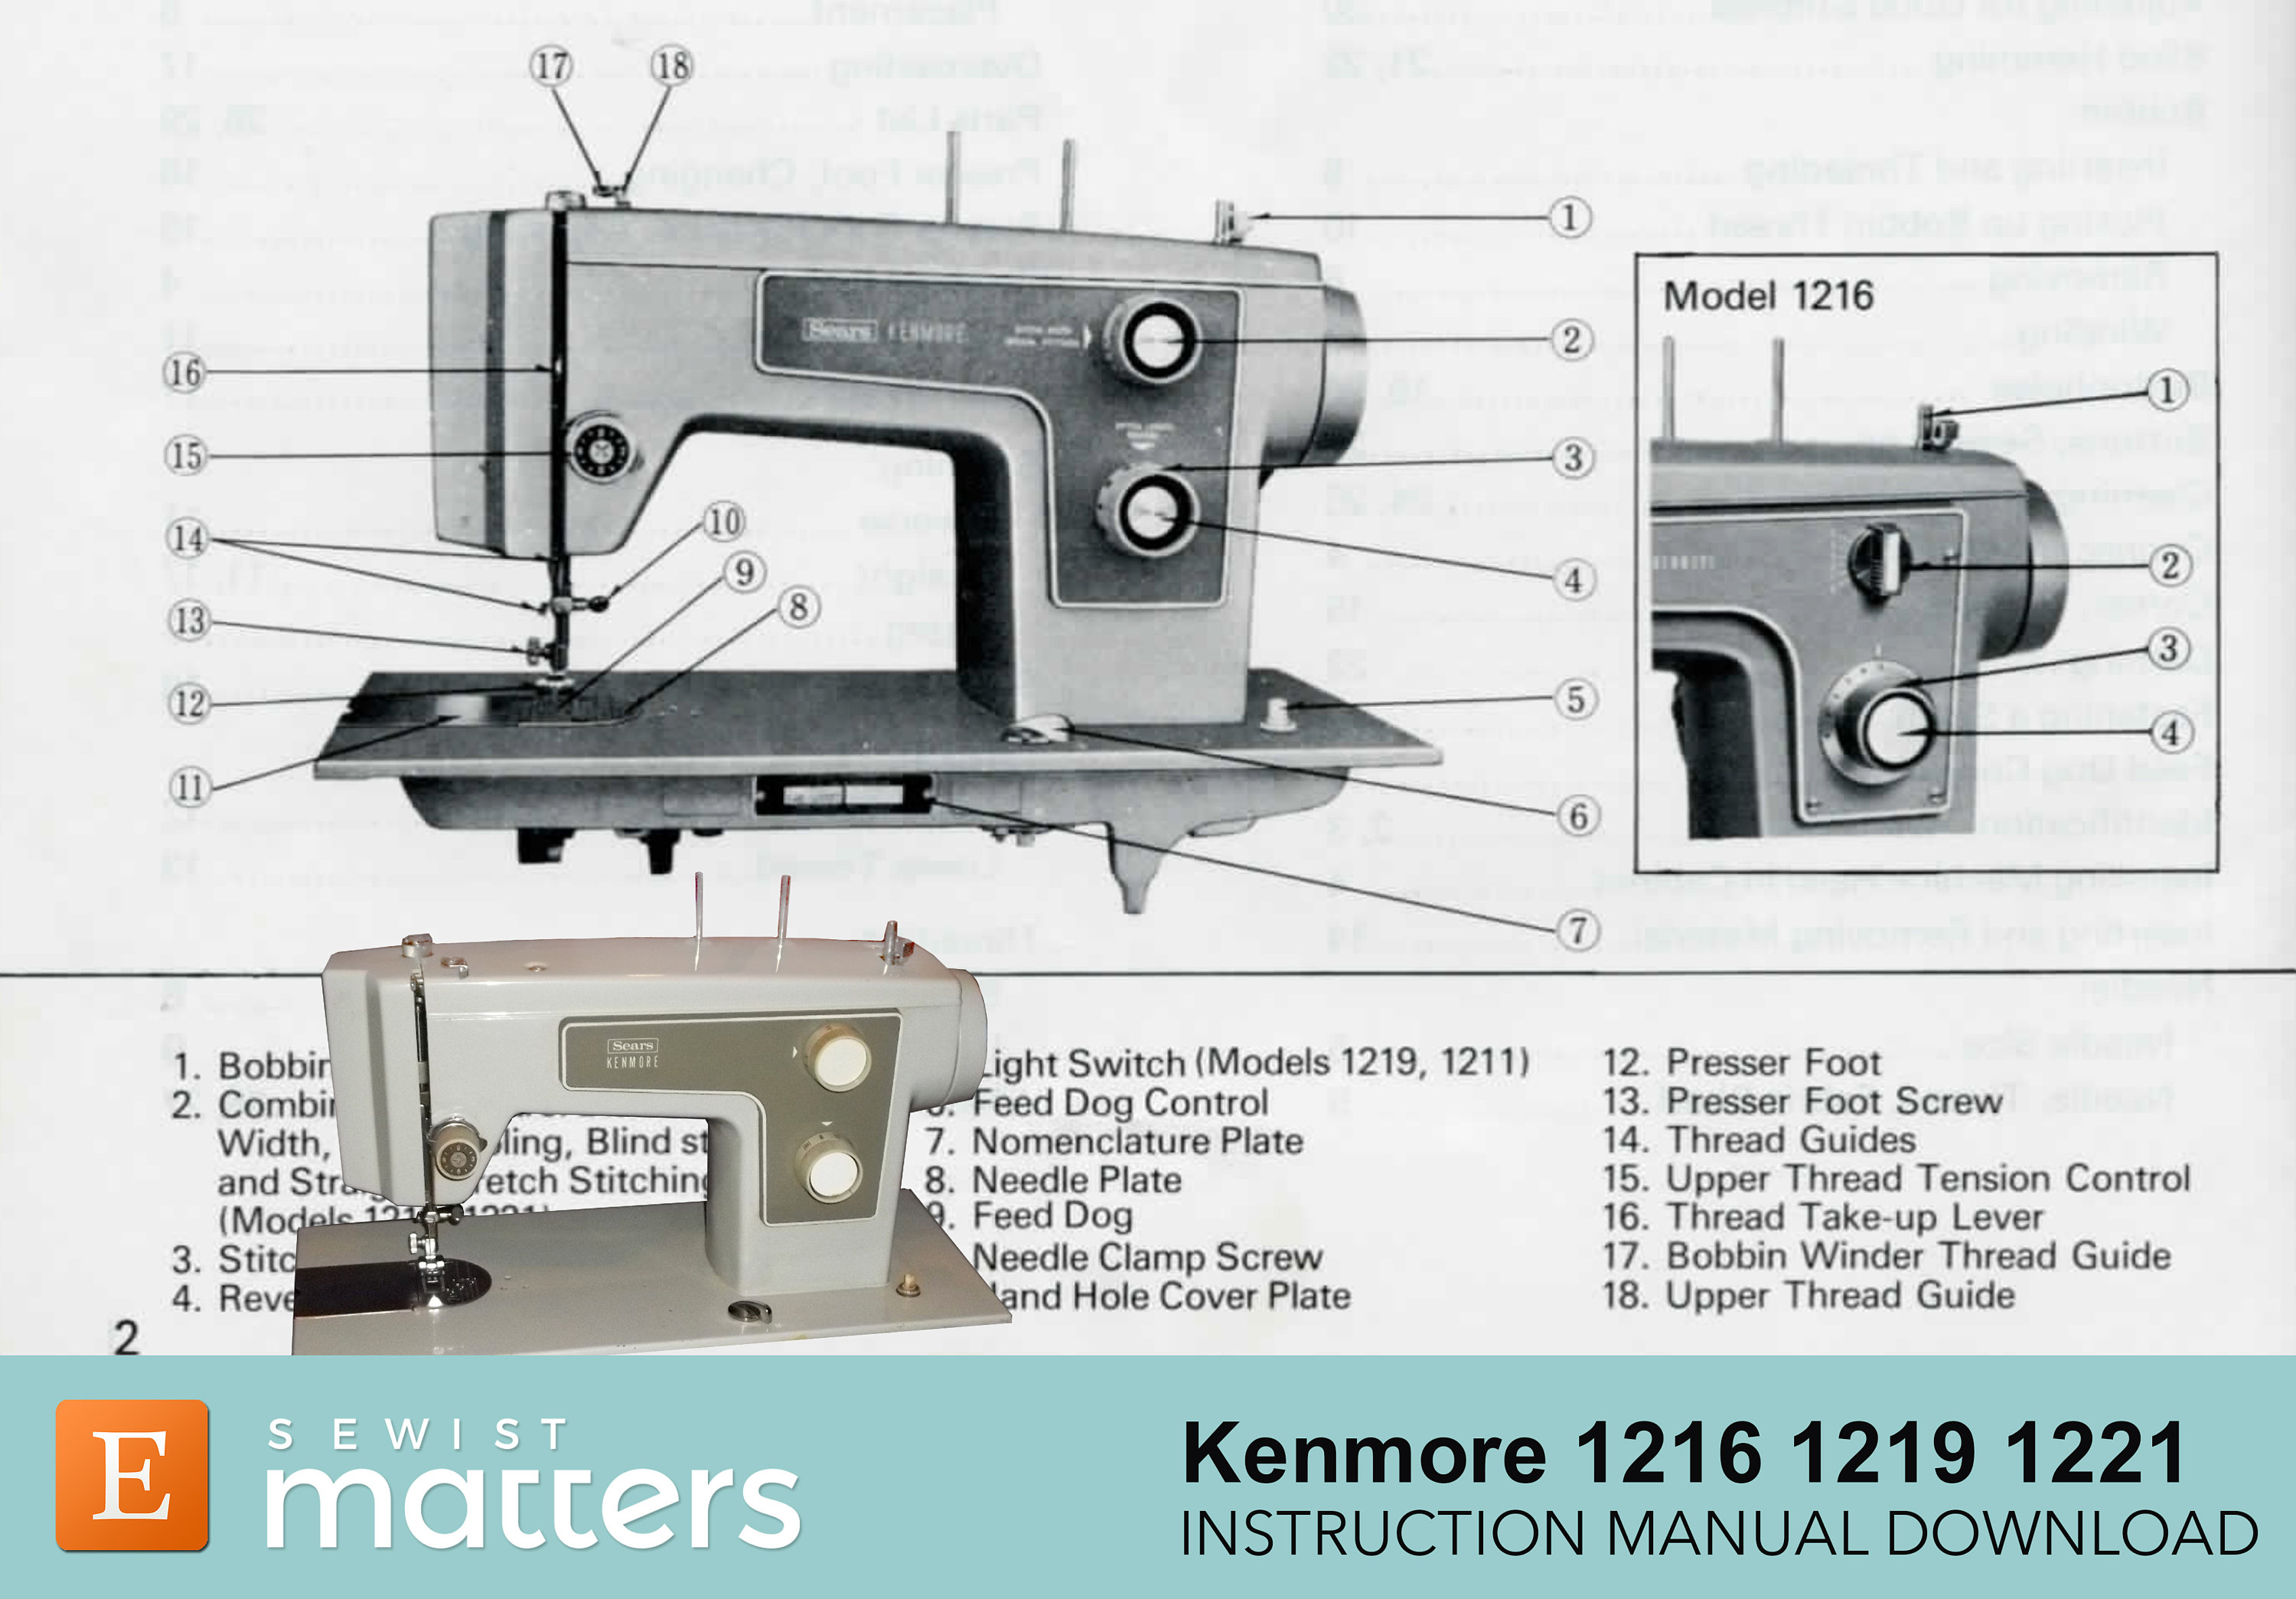 Kenmore 1216, 1219 & 1221 Sewing Machine Instruction Manual PDF Download 